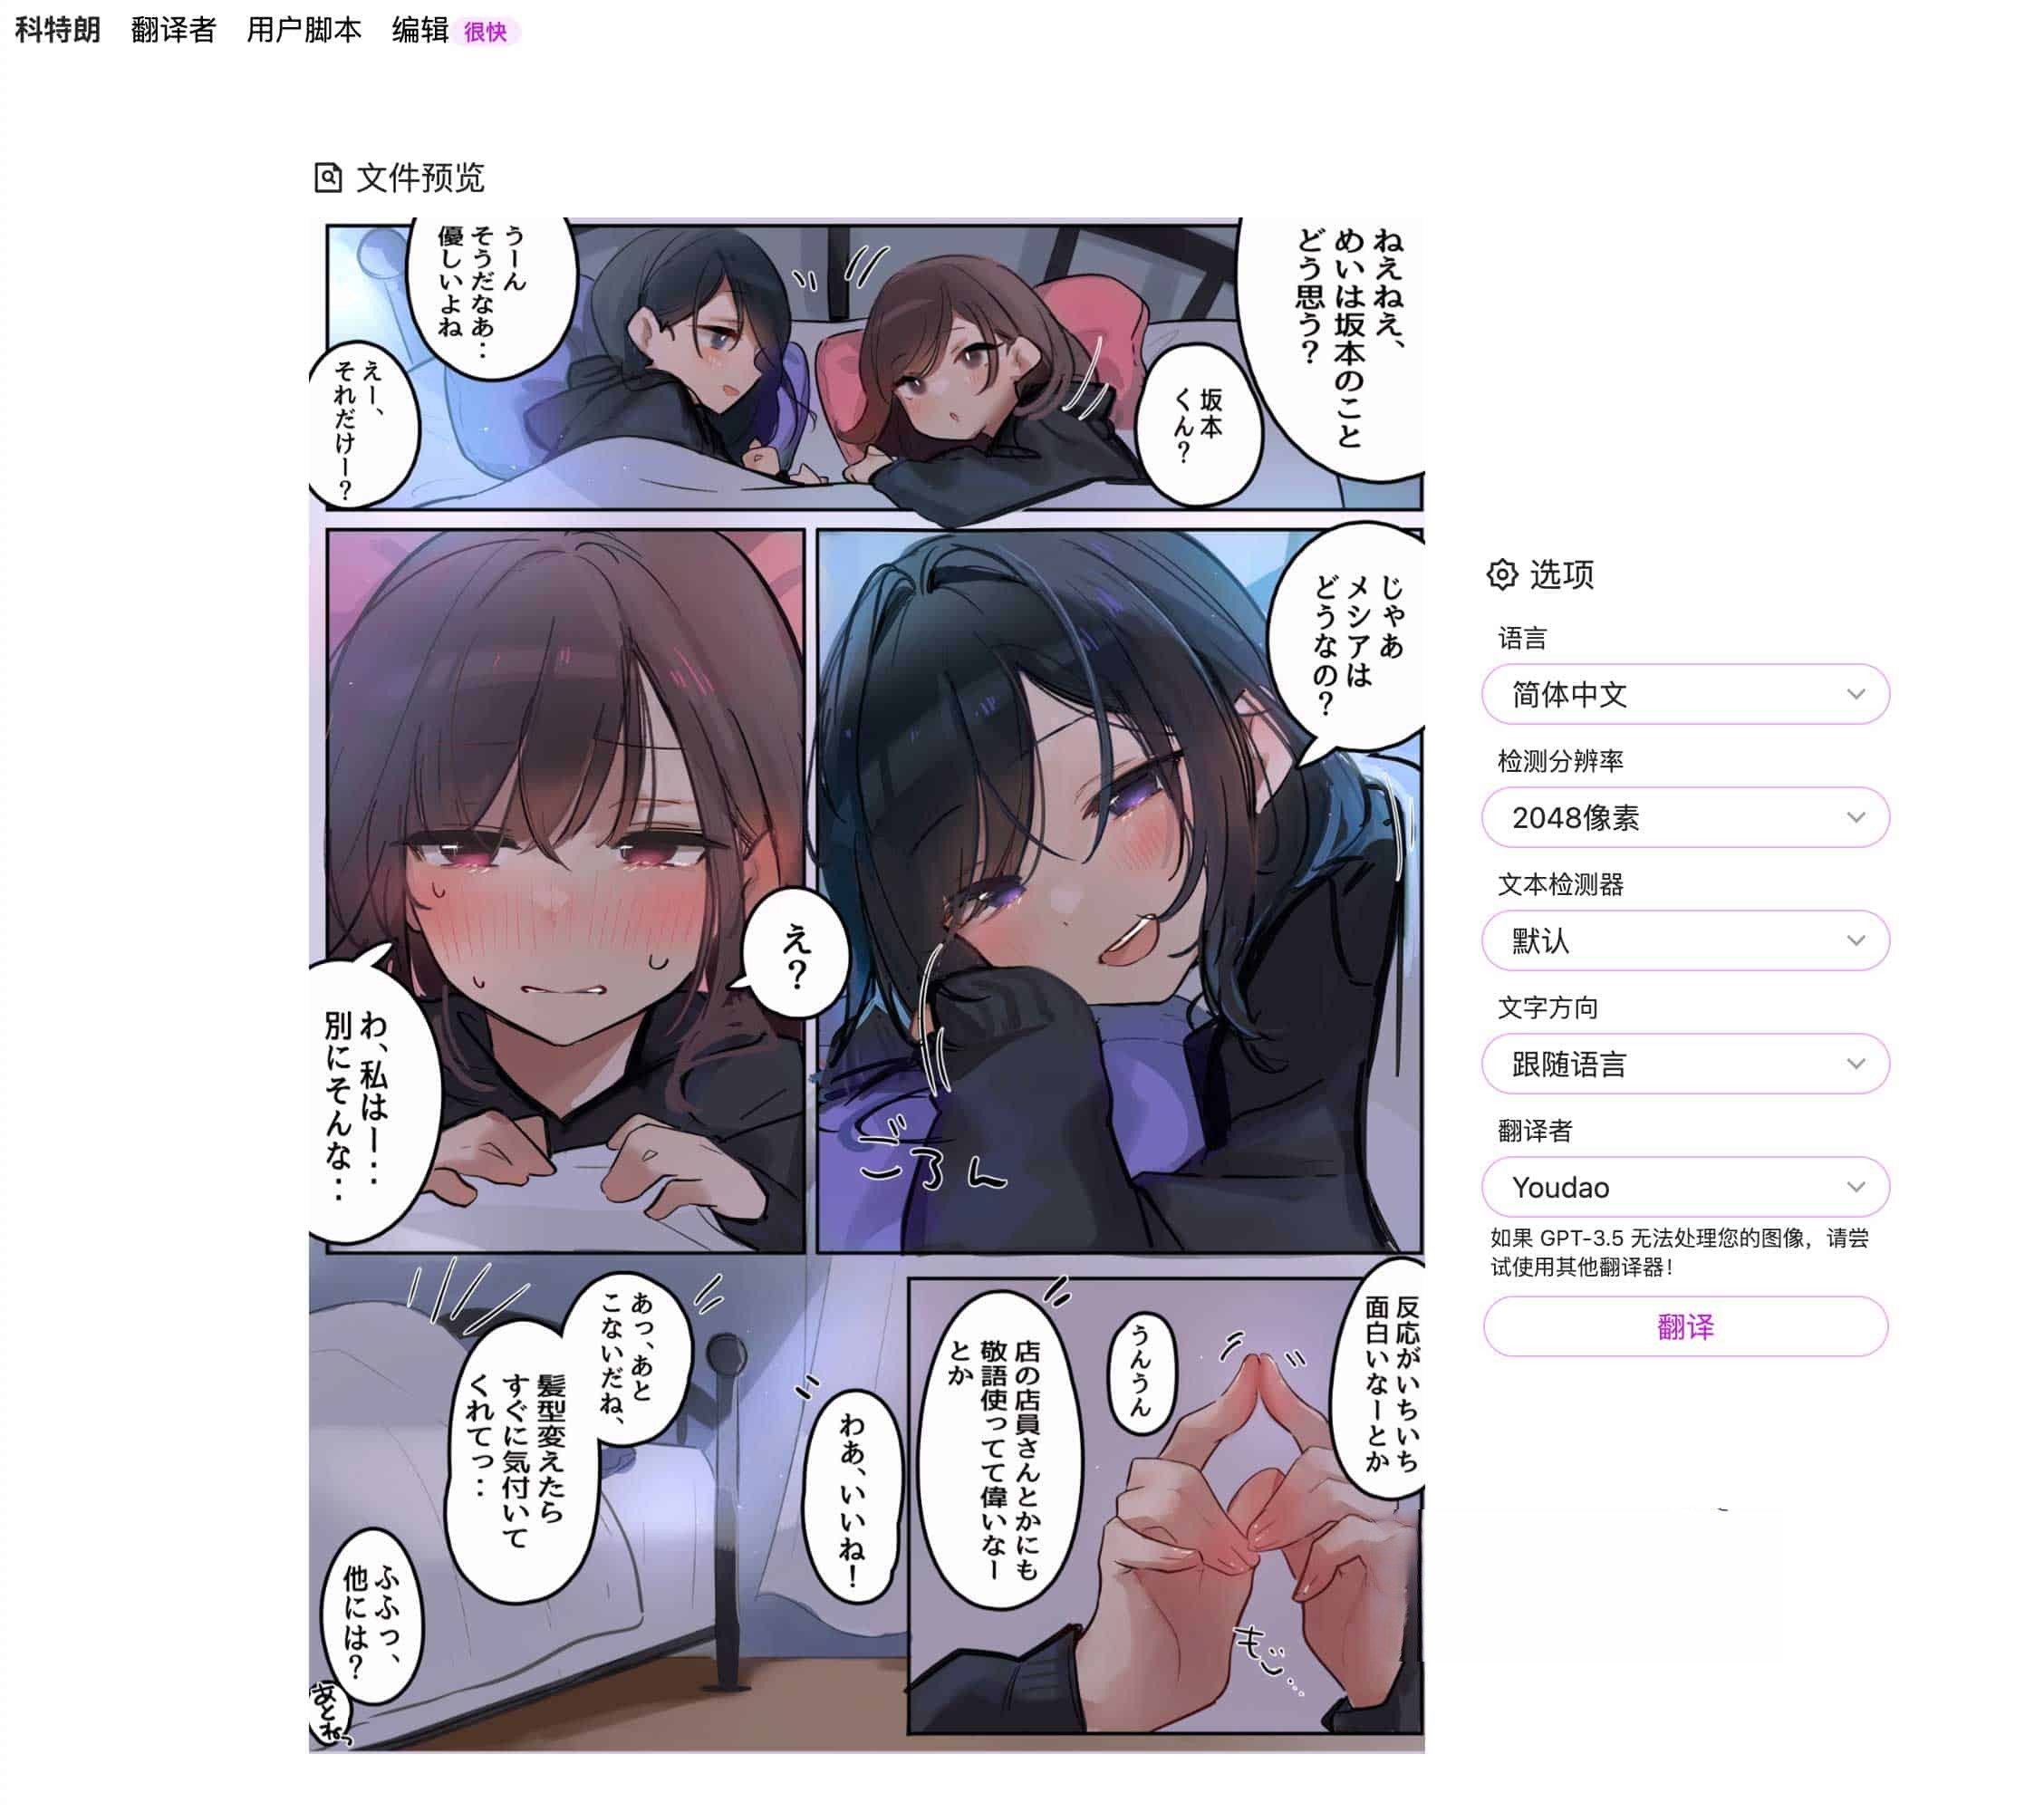 Image/Manga Translator-开源图片翻译工具 漫画图片翻译器